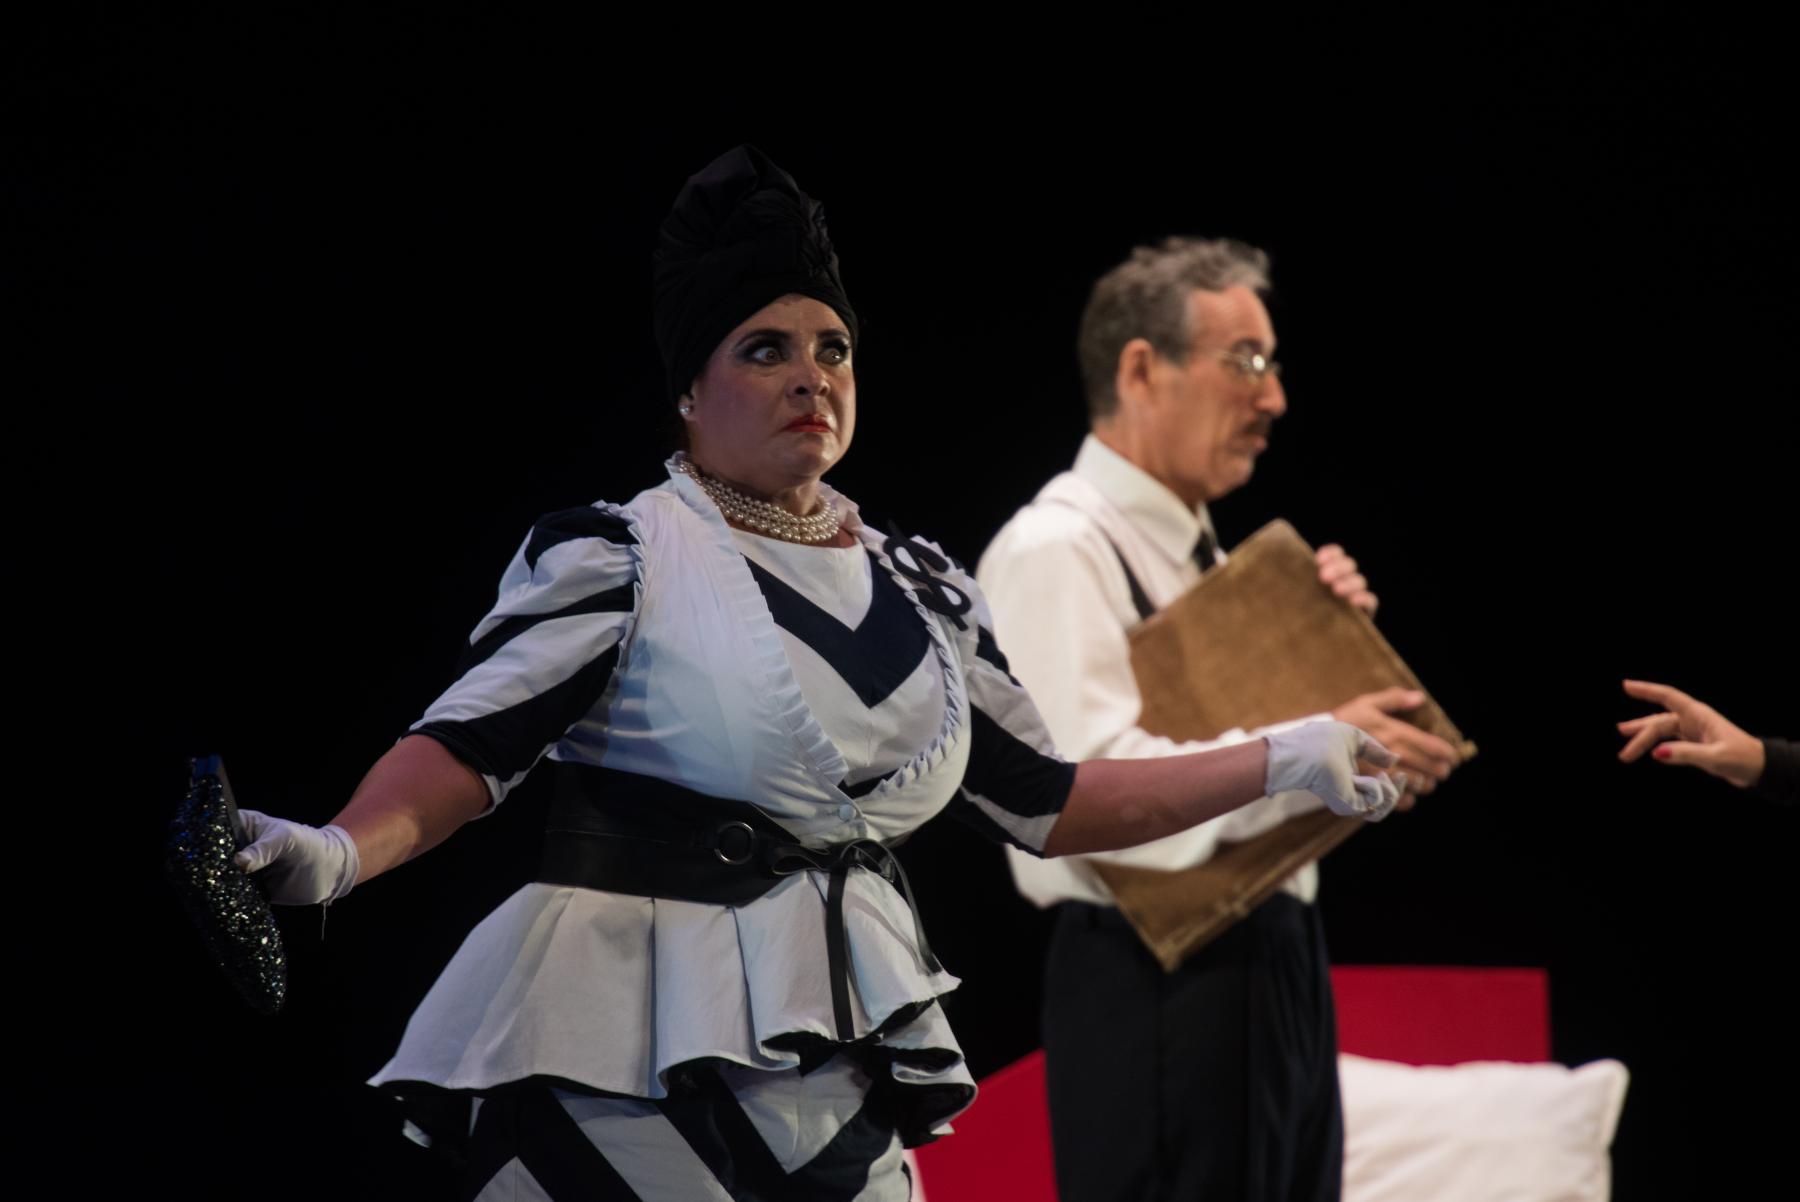 Ernesto Donas, La Fille du Régiment, Gran Teatro de la Habana, Nov. 2019